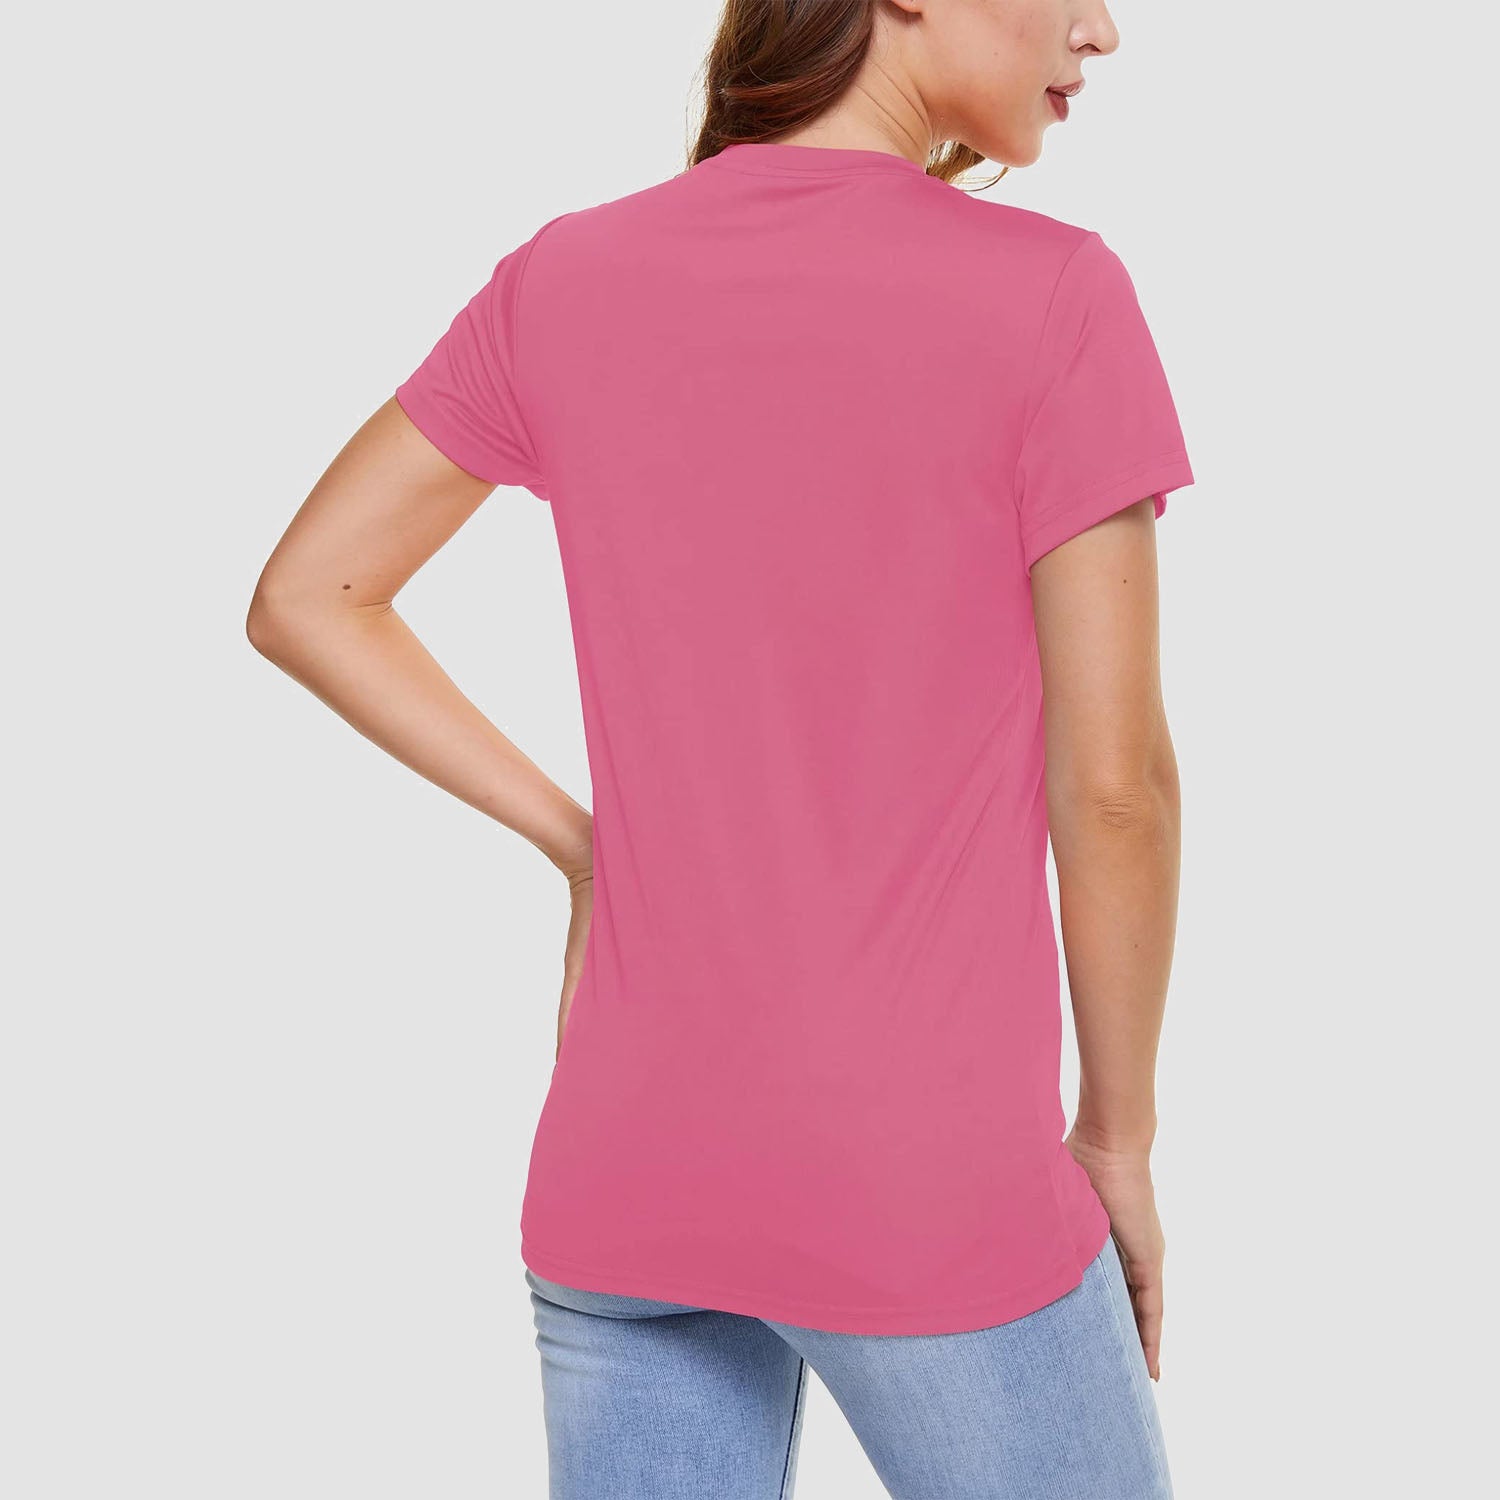 MAGCOMSEN Hiking Shirts Women UV Protection Swim Shirts for Women